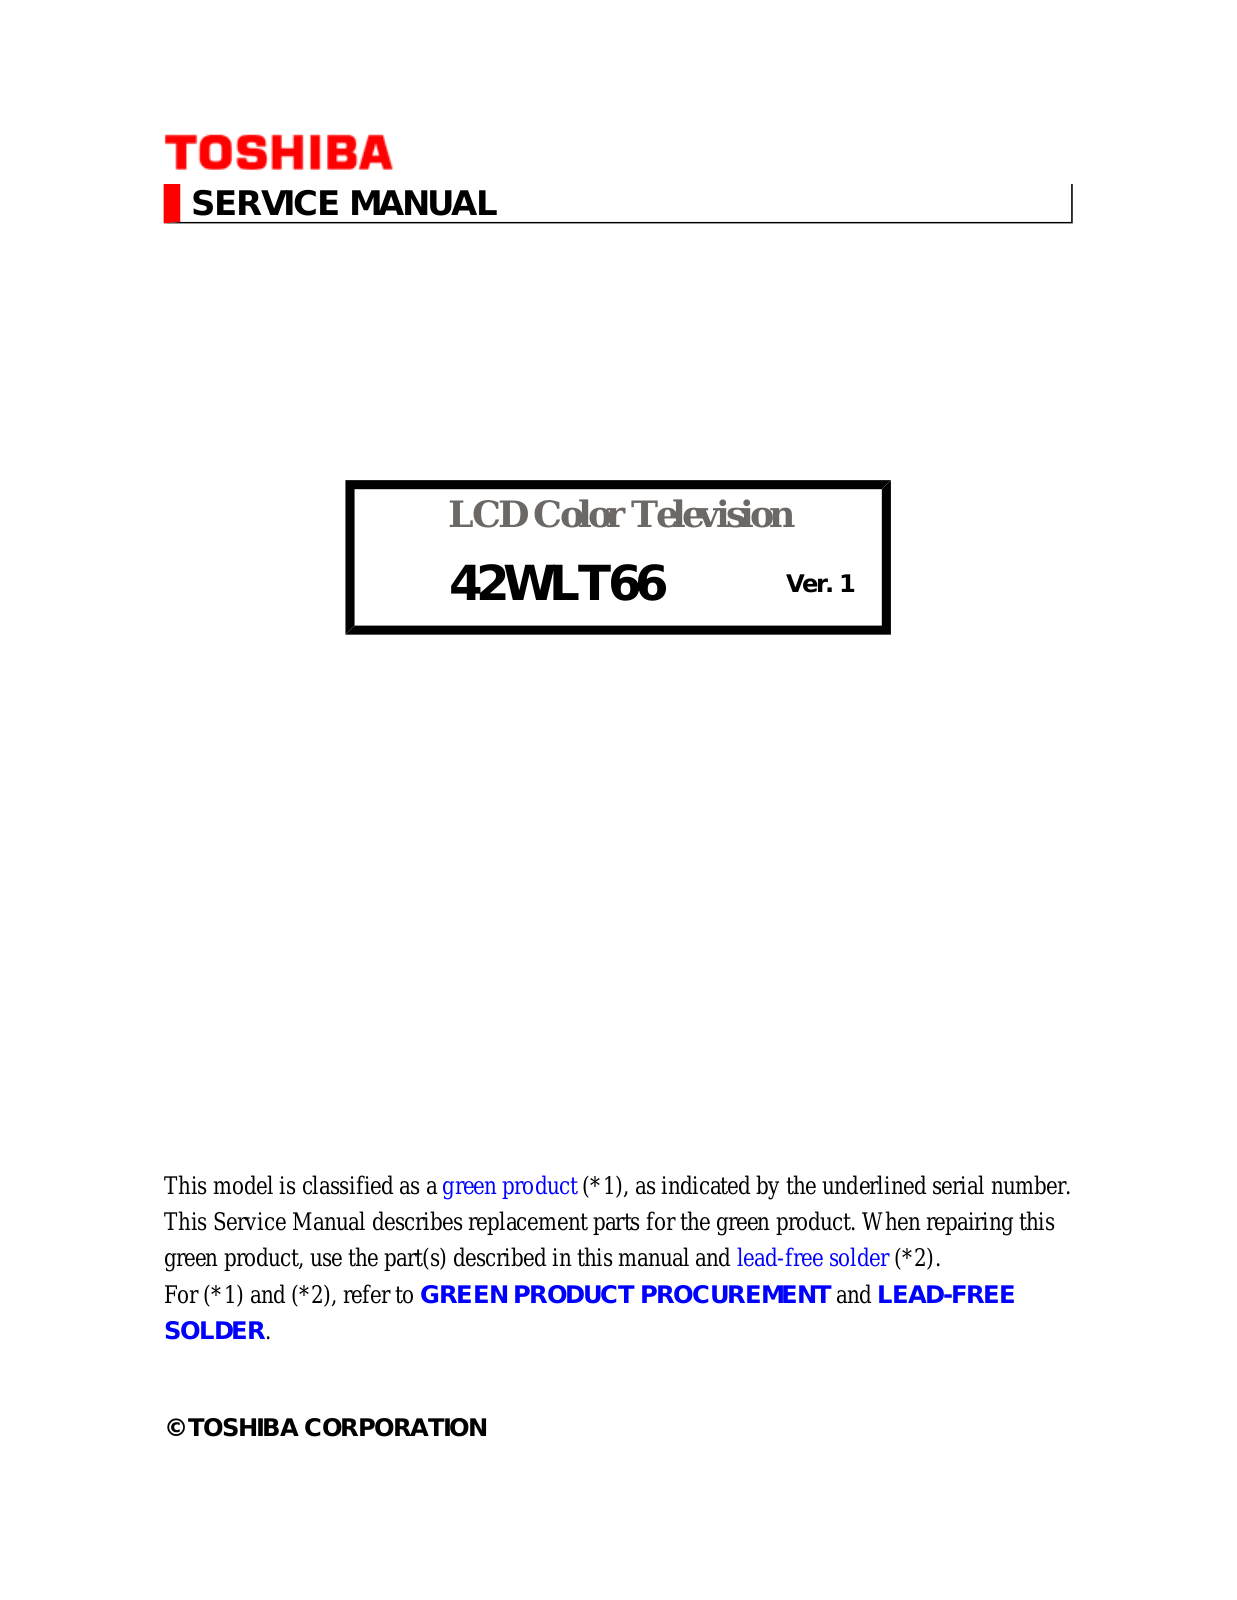 TOSHIBA 42WLT66 Service Manual